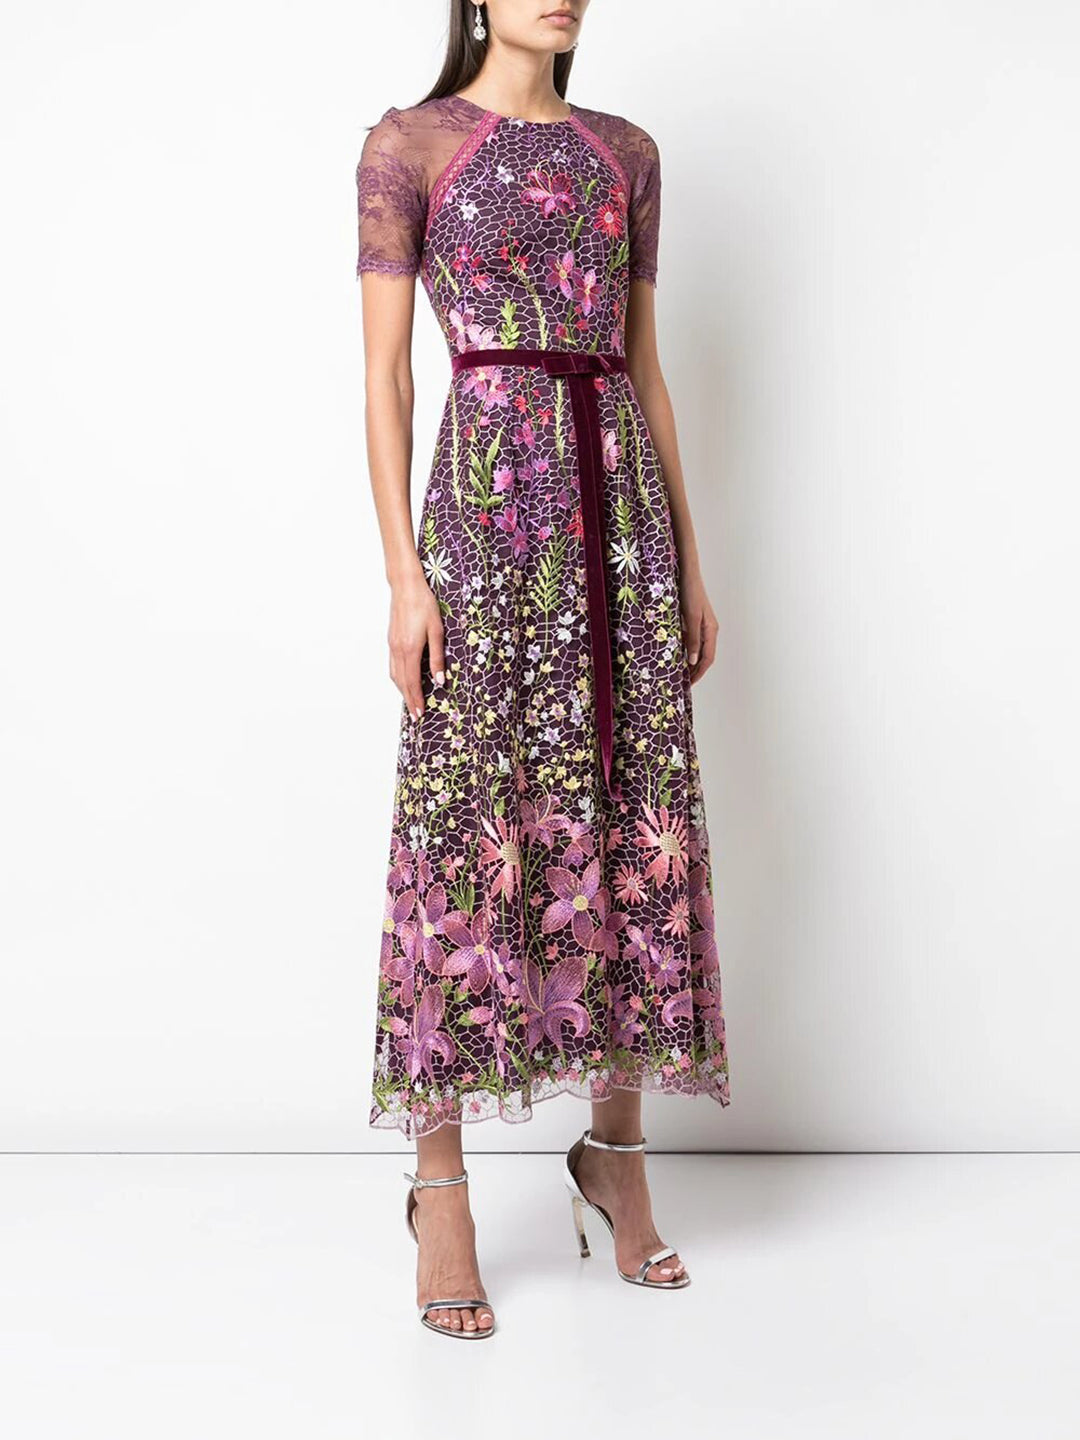 floral embroidered cocktail dress | Shop Marchesa Notte